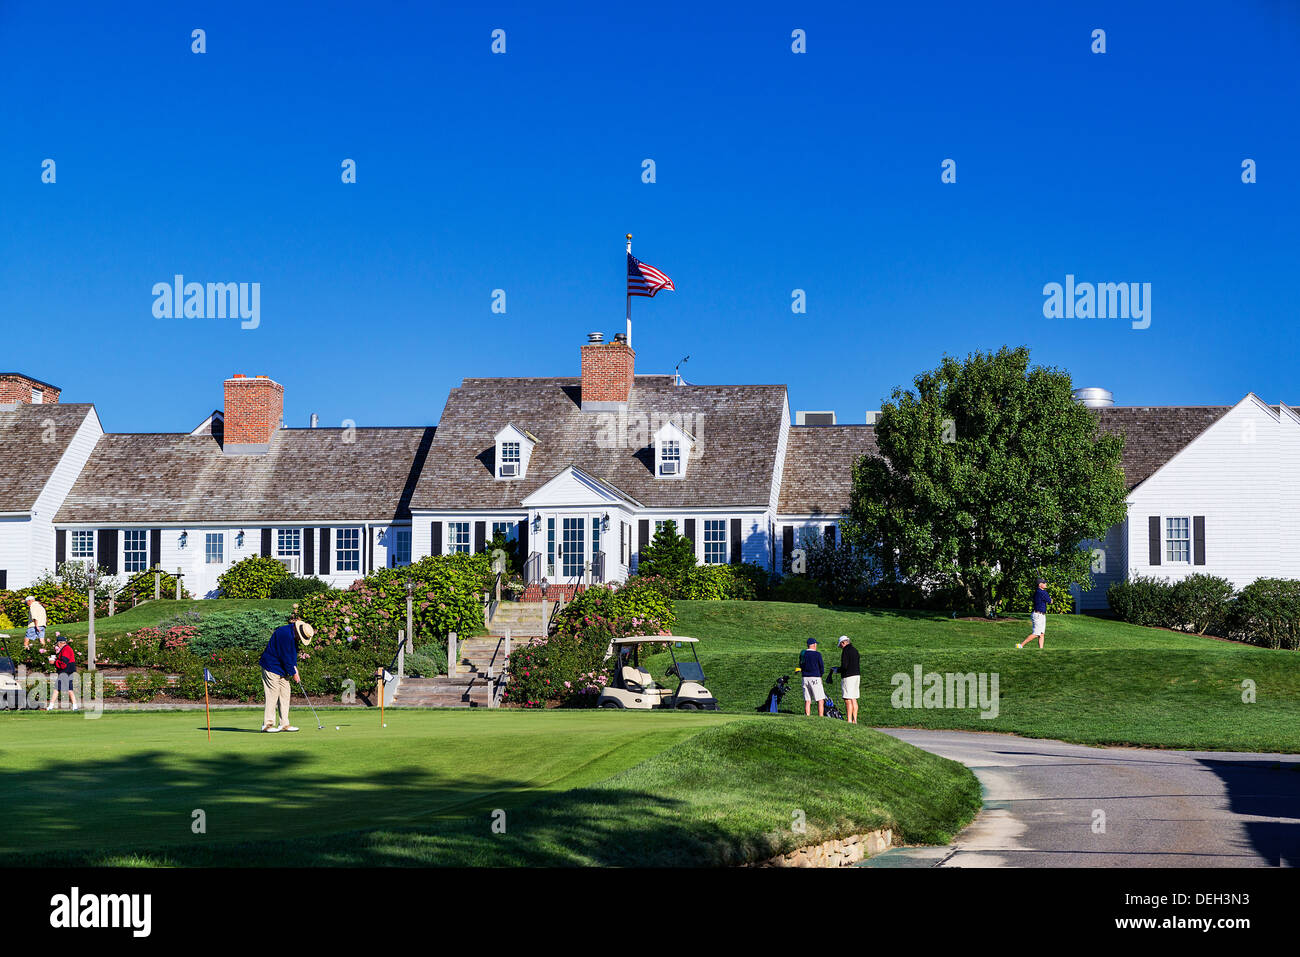 Campo da golf club house, pratica verde e tee off, verso est ho, chatham, Cape Cod, Massachusetts, Stati Uniti d'America Foto Stock